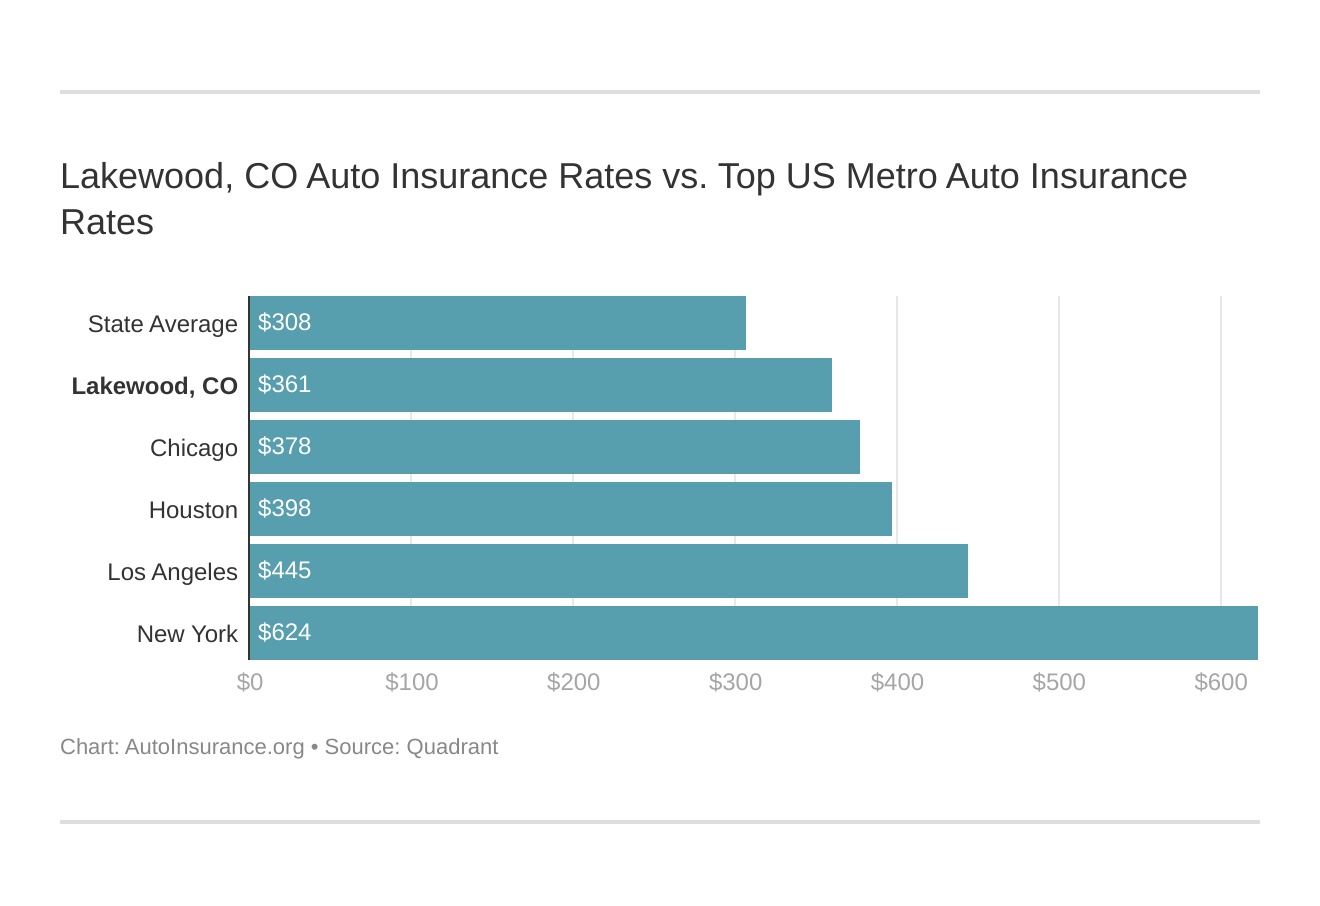 Lakewood, CO Auto Insurance Rates vs. Top US Metro Auto Insurance Rates